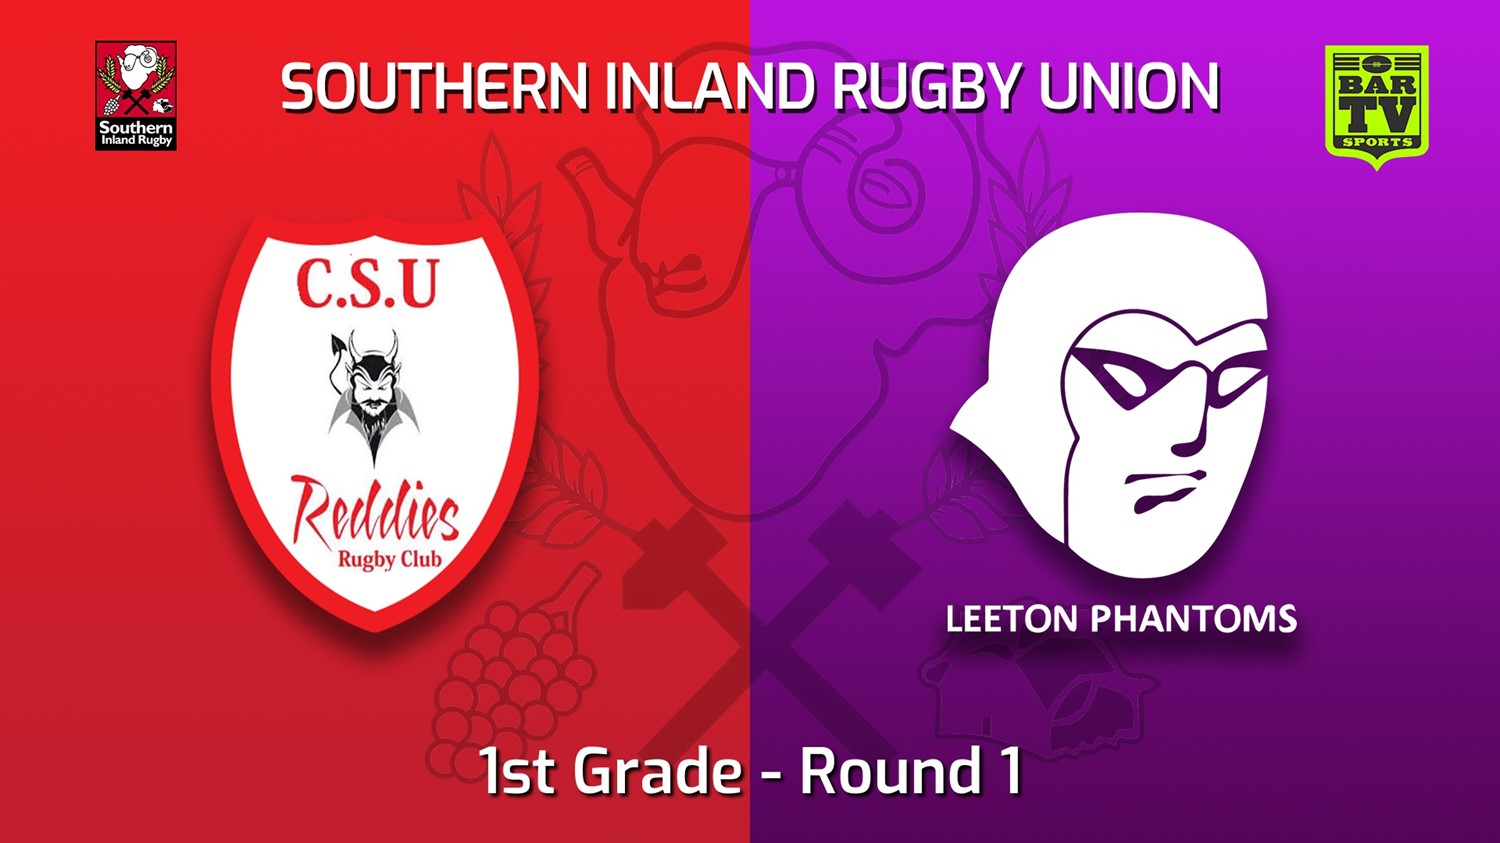 220402-Southern Inland Rugby Union Round 1 - 1st Grade - CSU Reddies v Leeton Phantoms (1) Minigame Slate Image